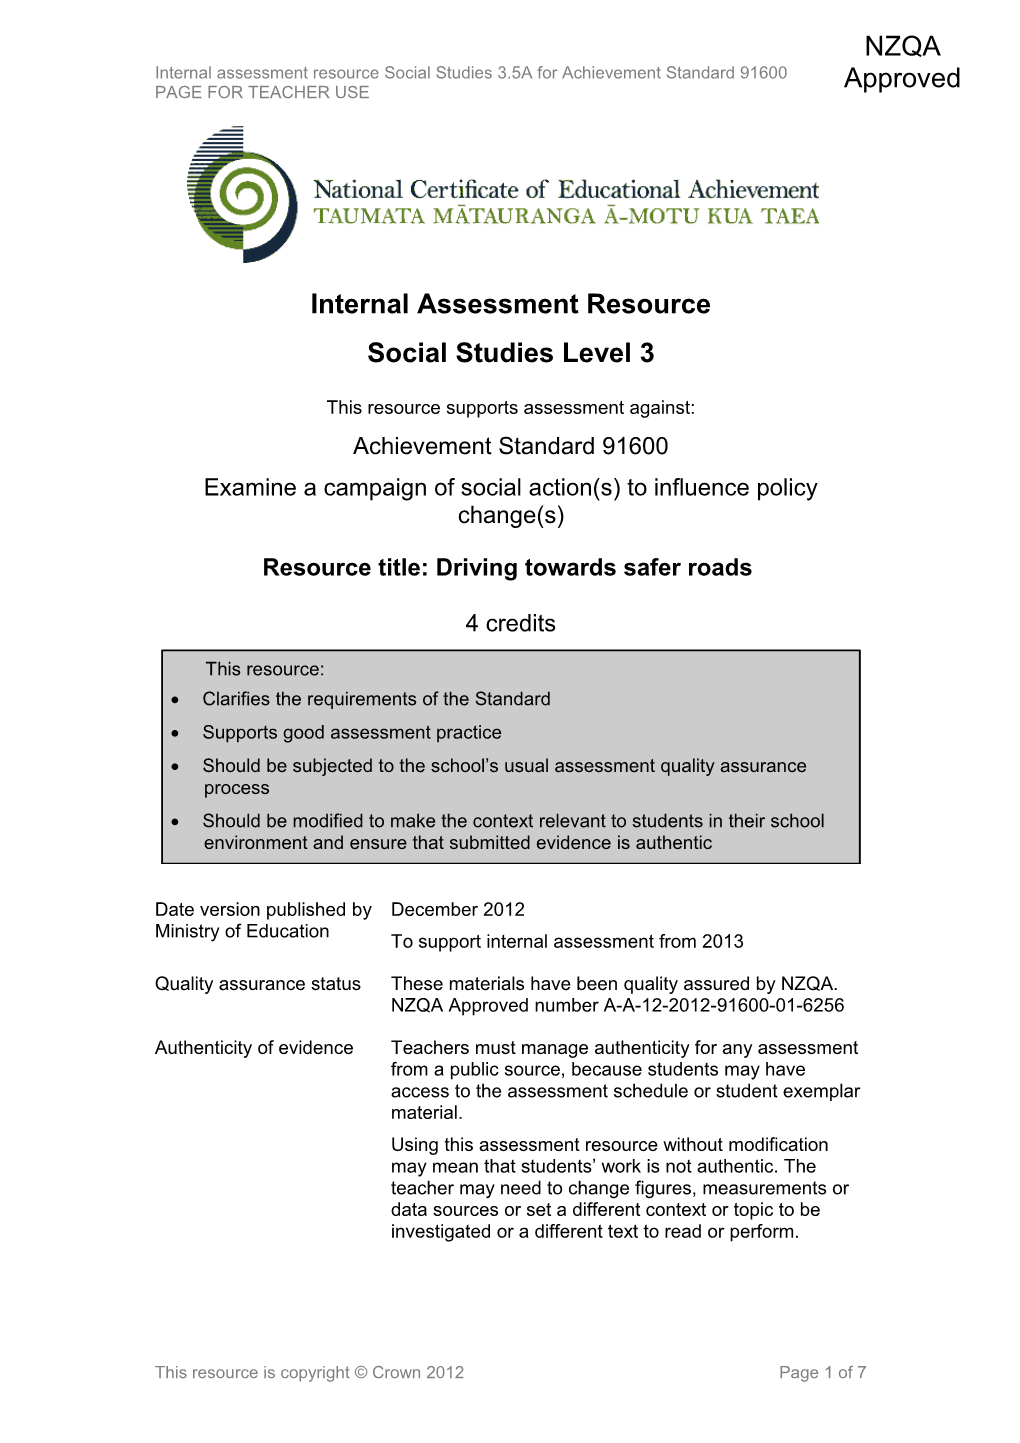 Level 3 Social Studies Internal Assessment Resource